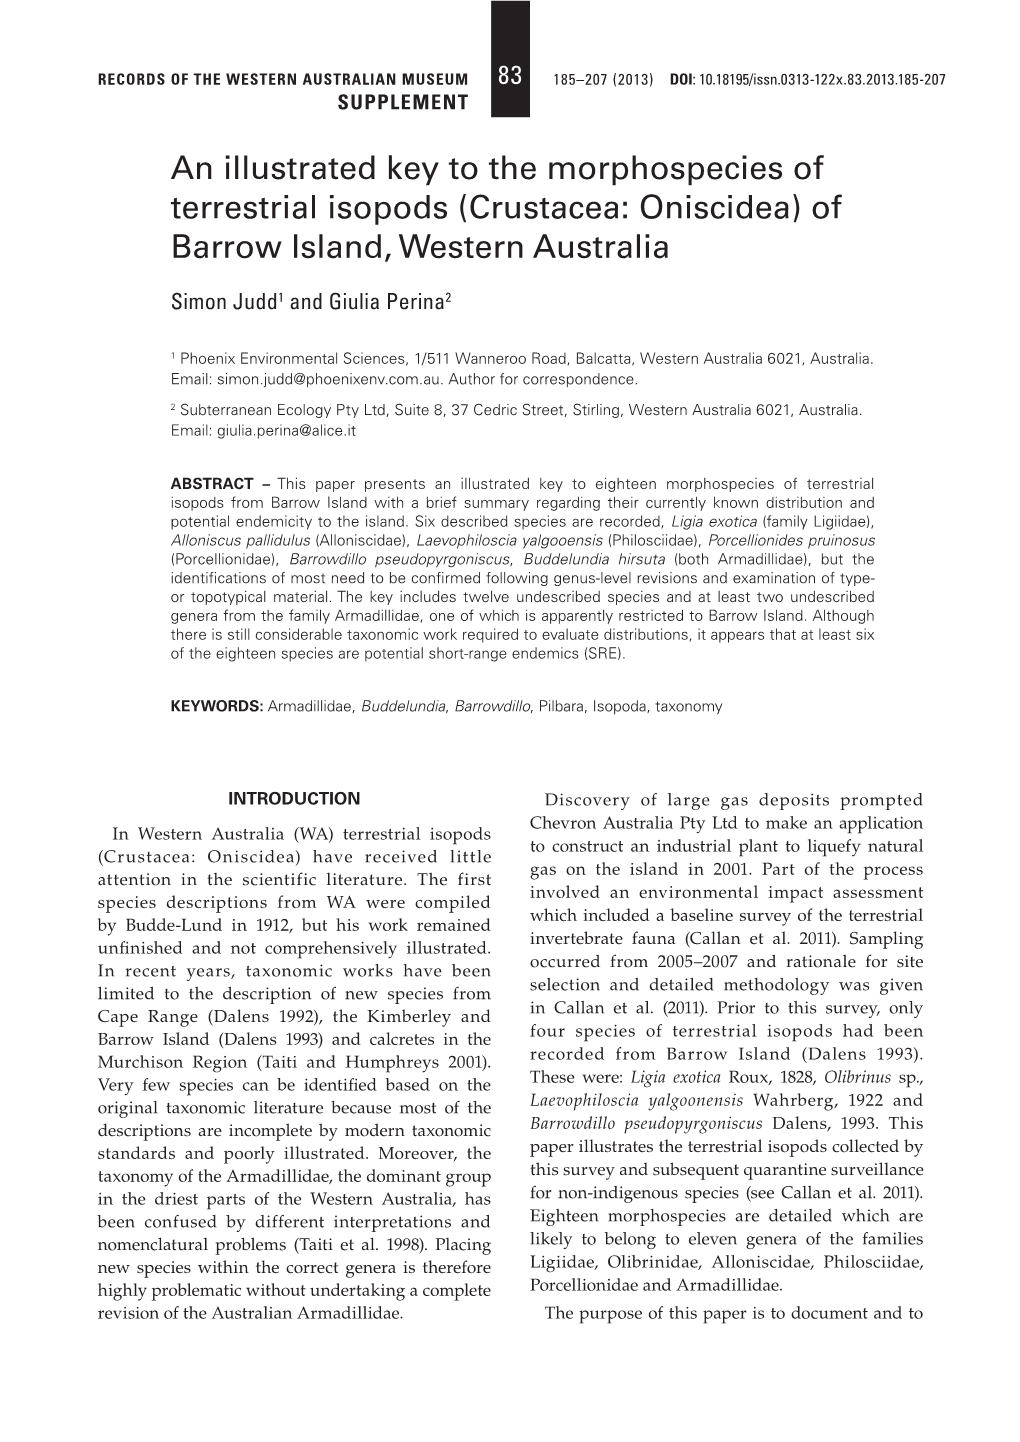 An Illustrated Key to the Morphospecies of Terrestrial Isopods (Crustacea: Oniscidea) of Barrow Island, Western Australia